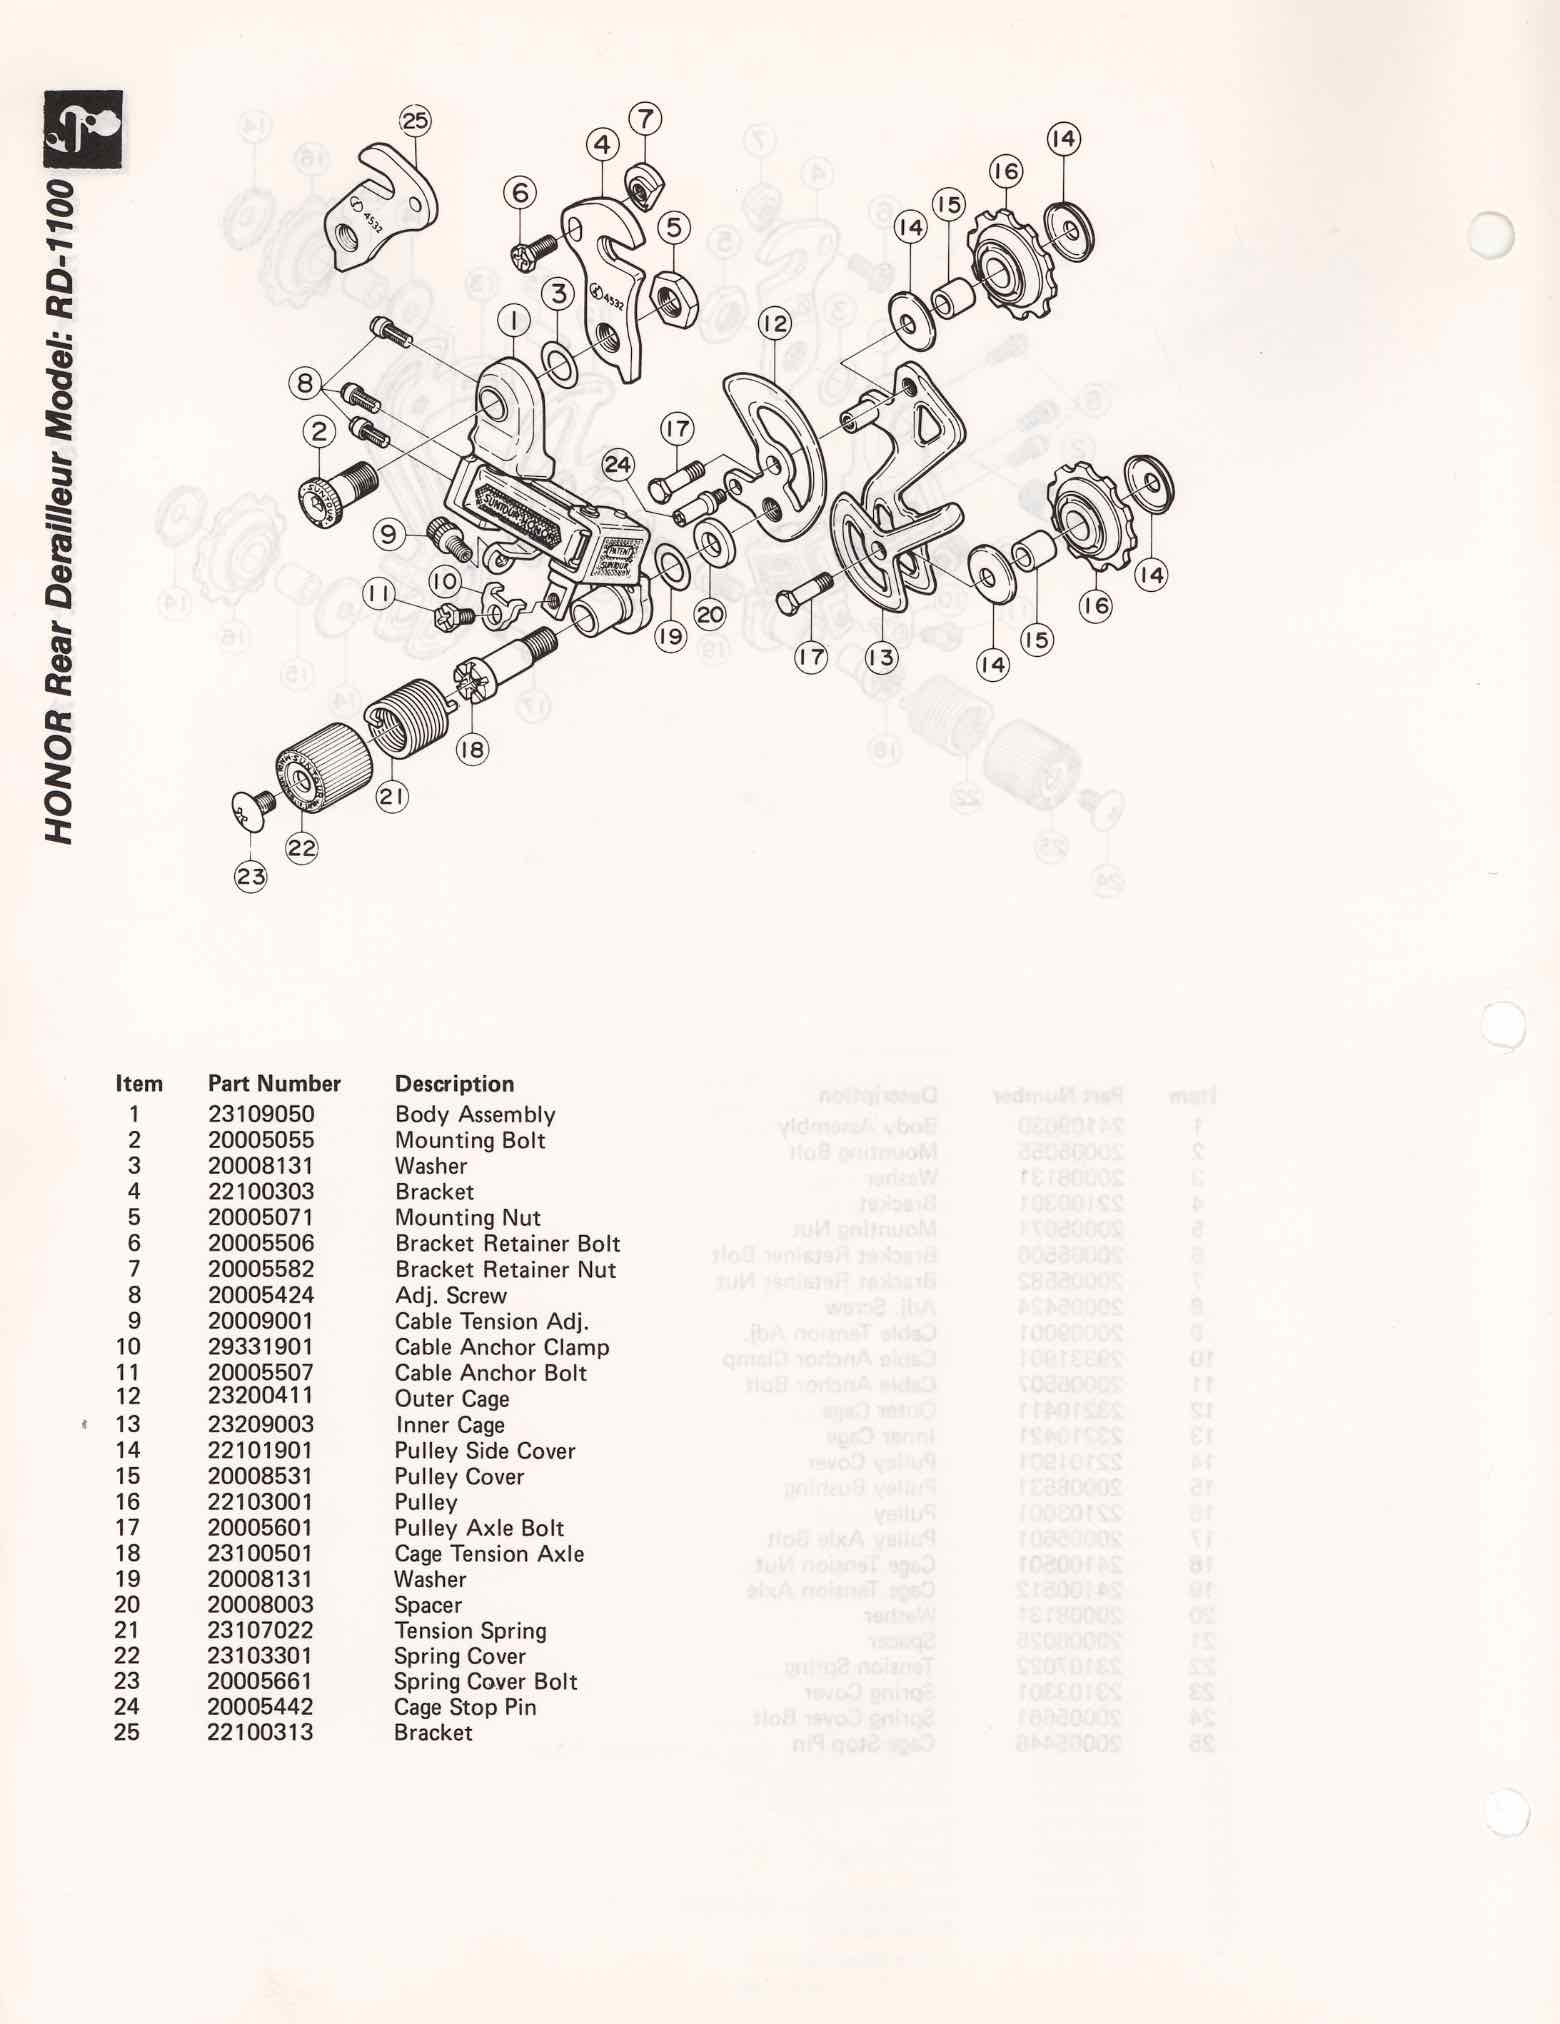 SunTour Small Parts Catalog - 1983? scan 3 main image